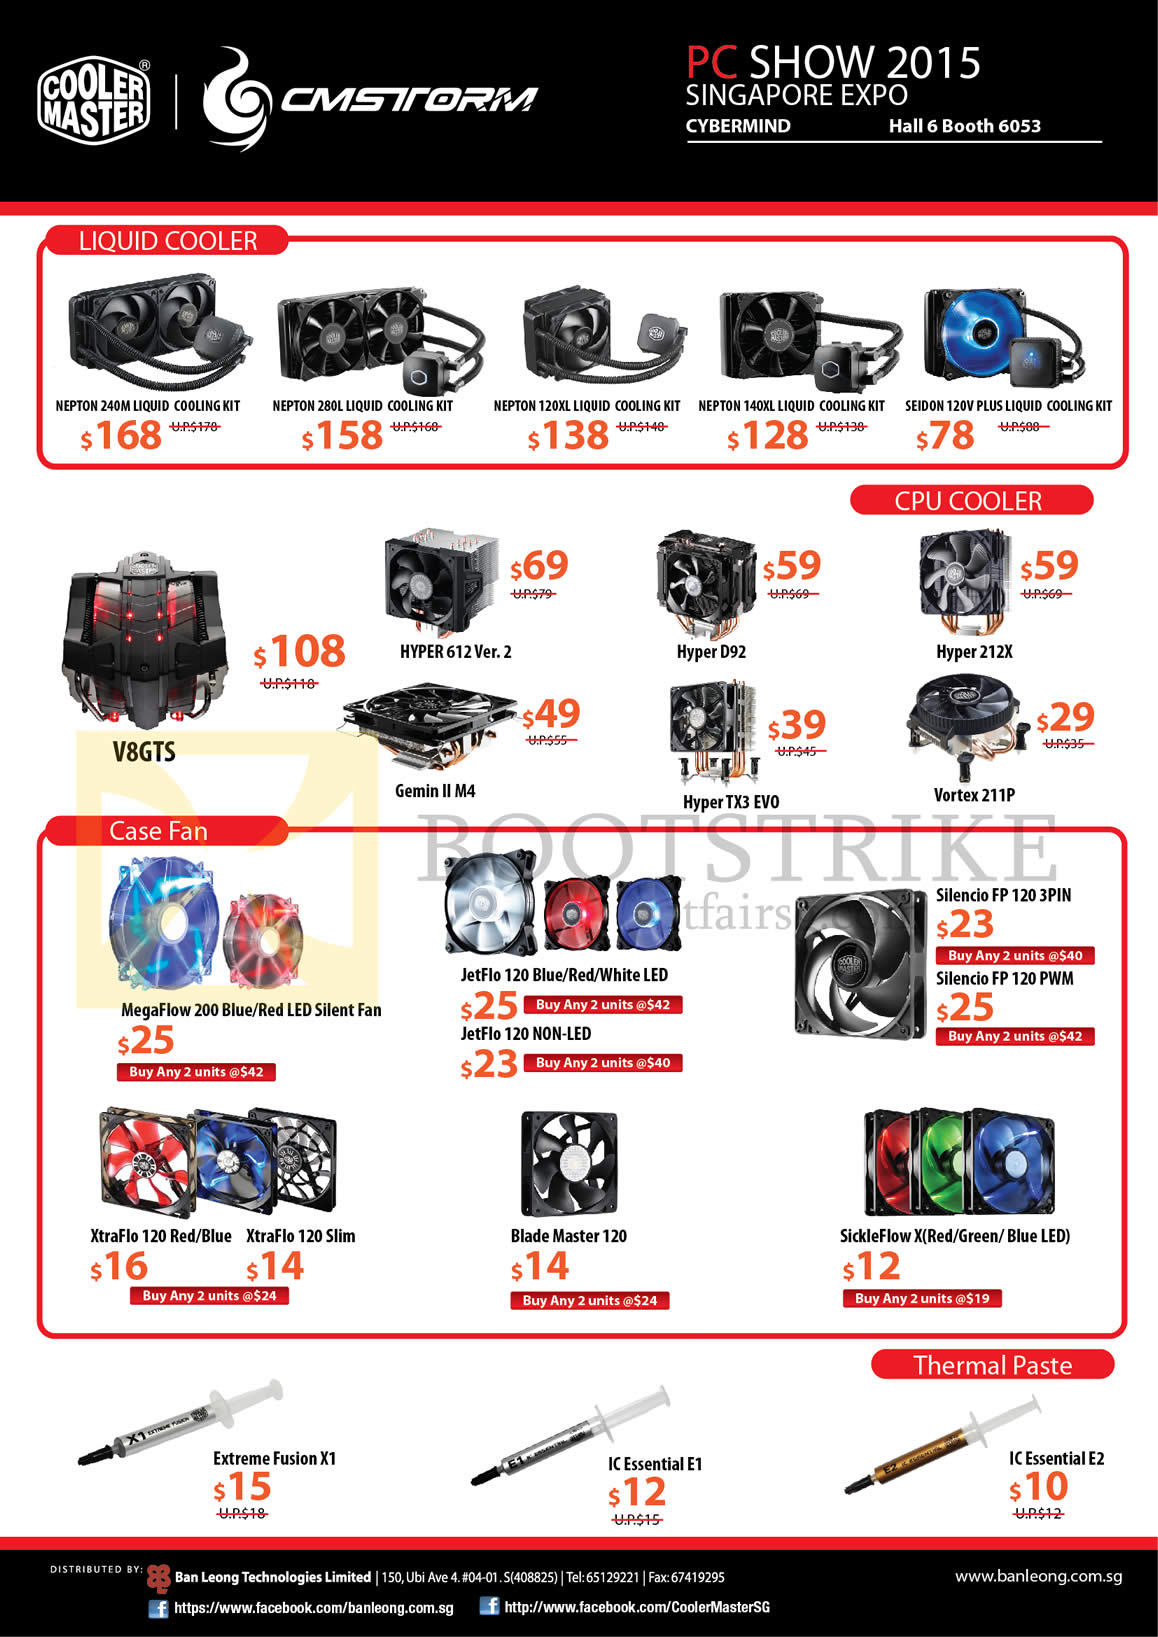 PC SHOW 2015 price list image brochure of Cooler Master CMStorm Cybermind Liquid Cooler, Case Fan, CPU Cooler, MegaFlow, XtraFlo, JetFlo, Blade Master, Hyper, Nepton